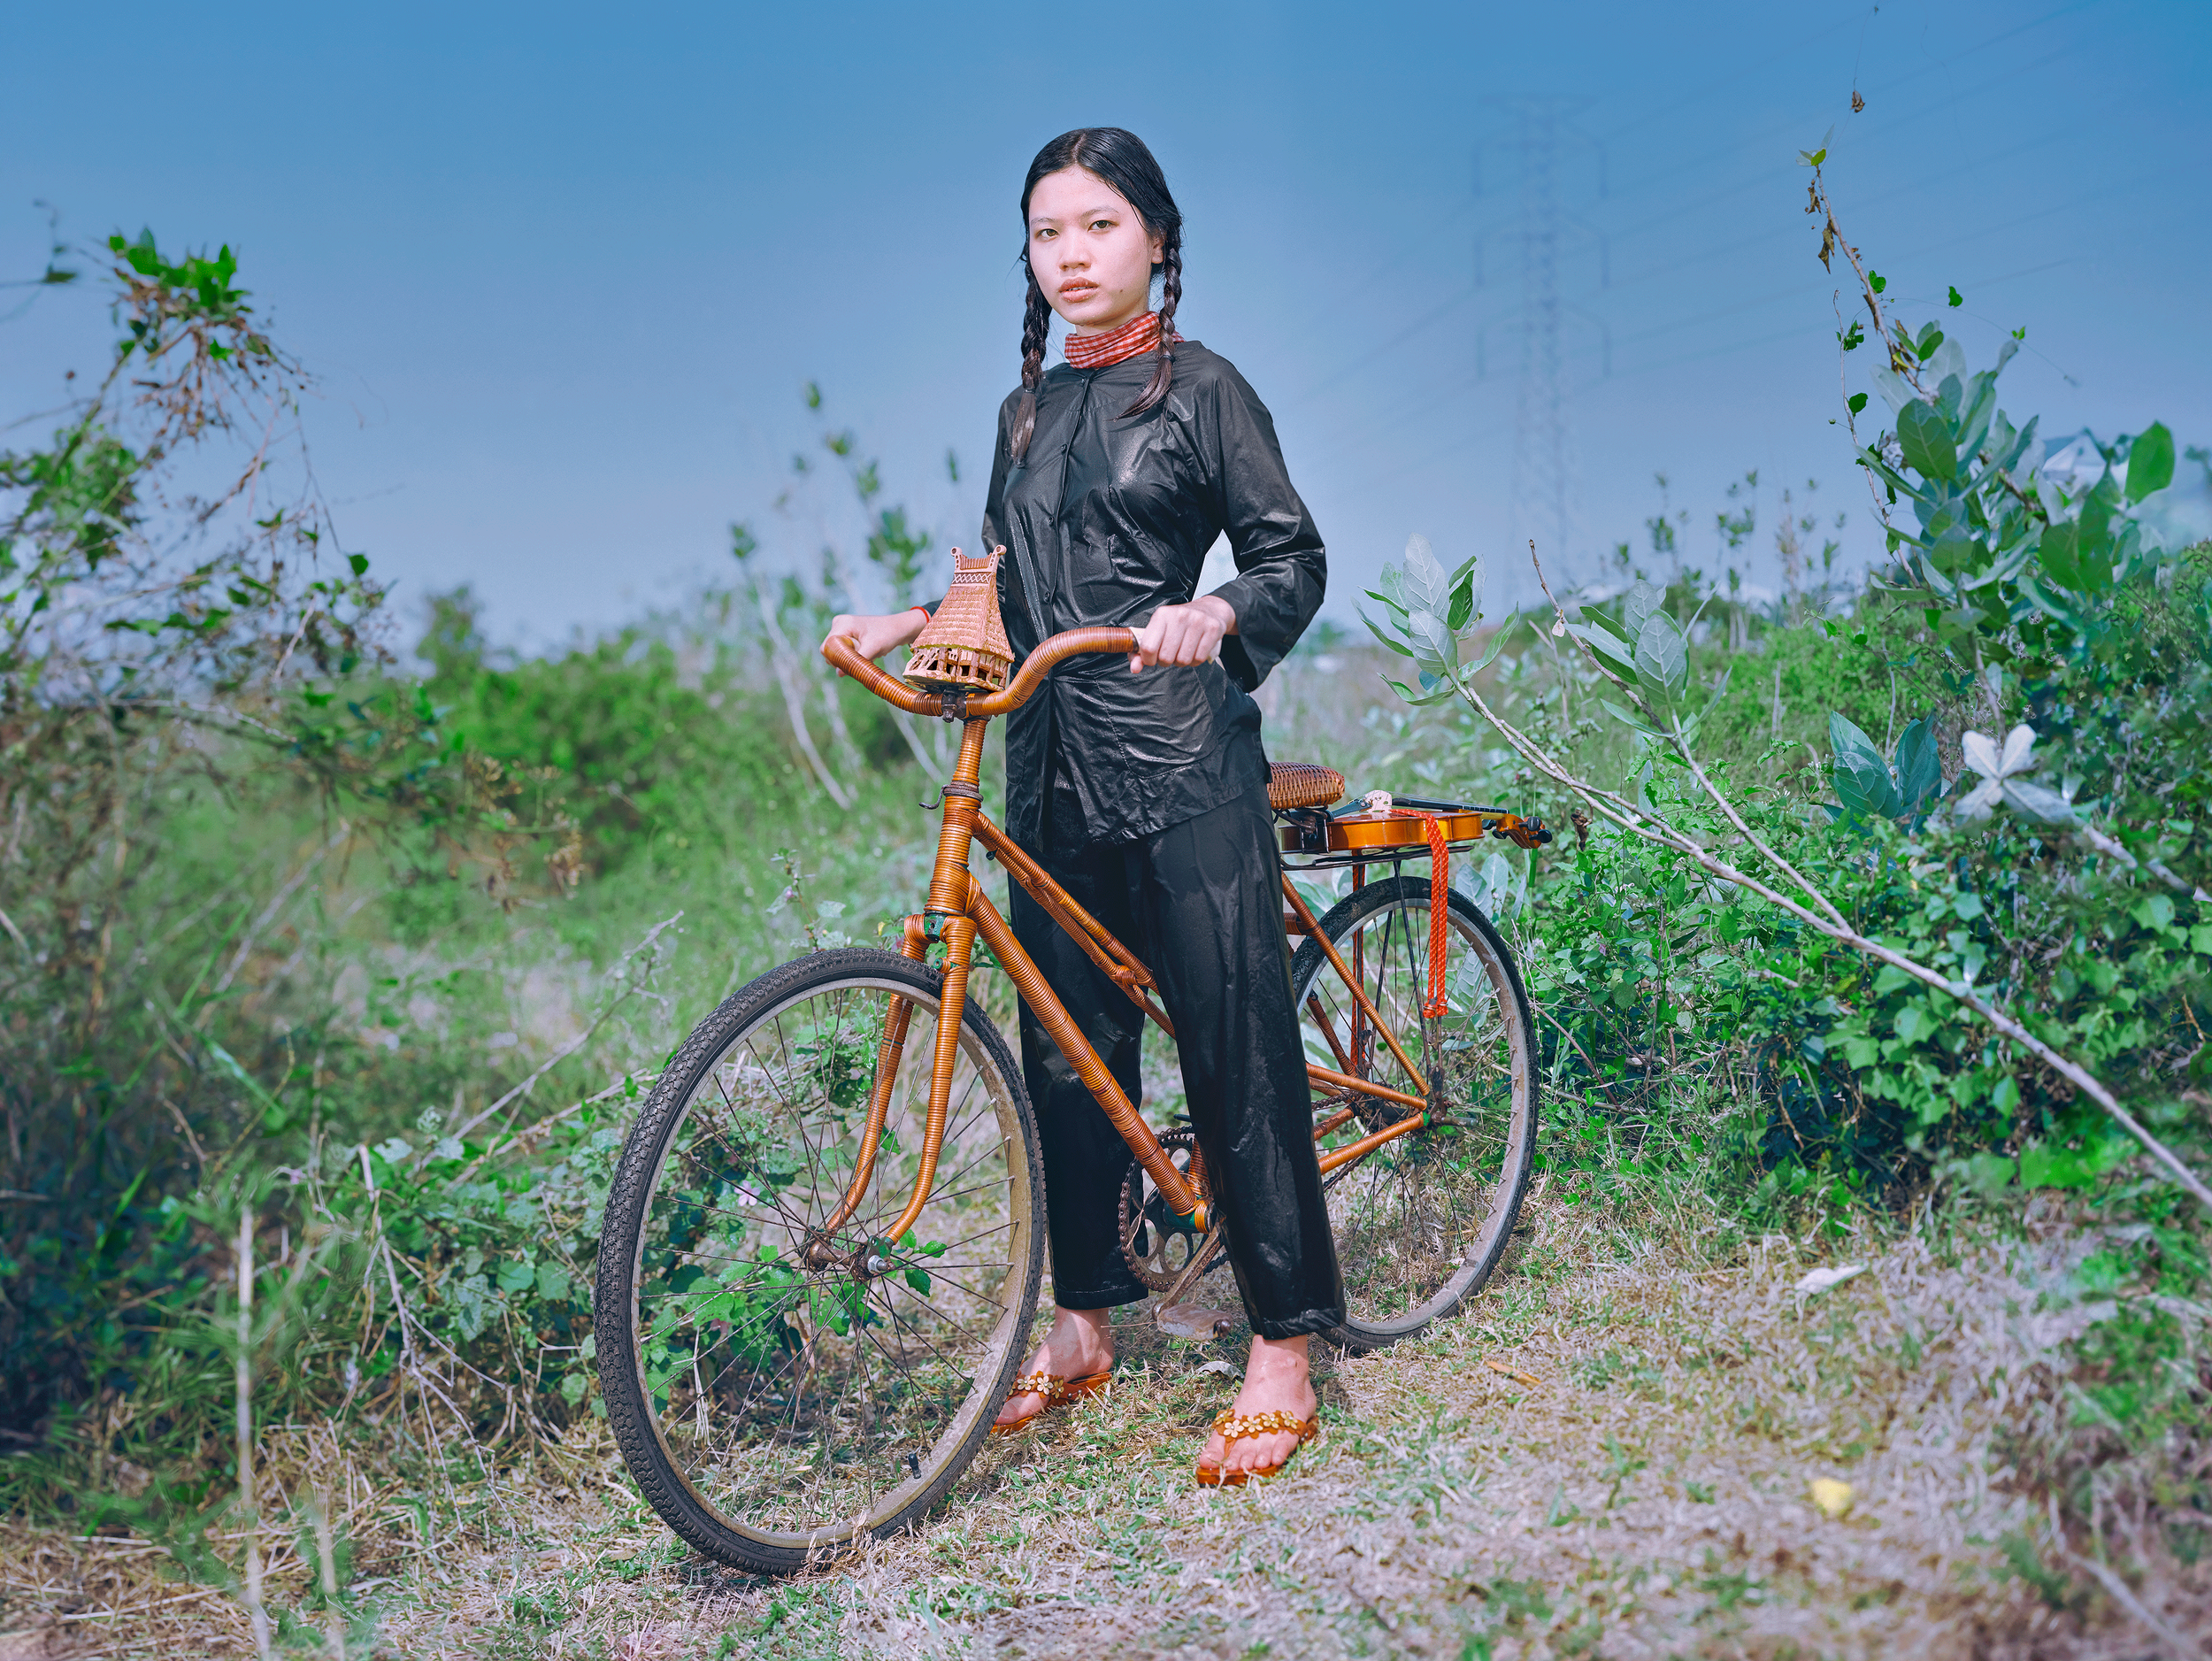   Chiến Thắng Ba Tơ IV,   from the Chiến Thắng Ba Tơ series.sRGB1966 (Collection de l'artiste)127.63 x 180.03 cm.(50 1/4 x 70 1/4 inch.) 